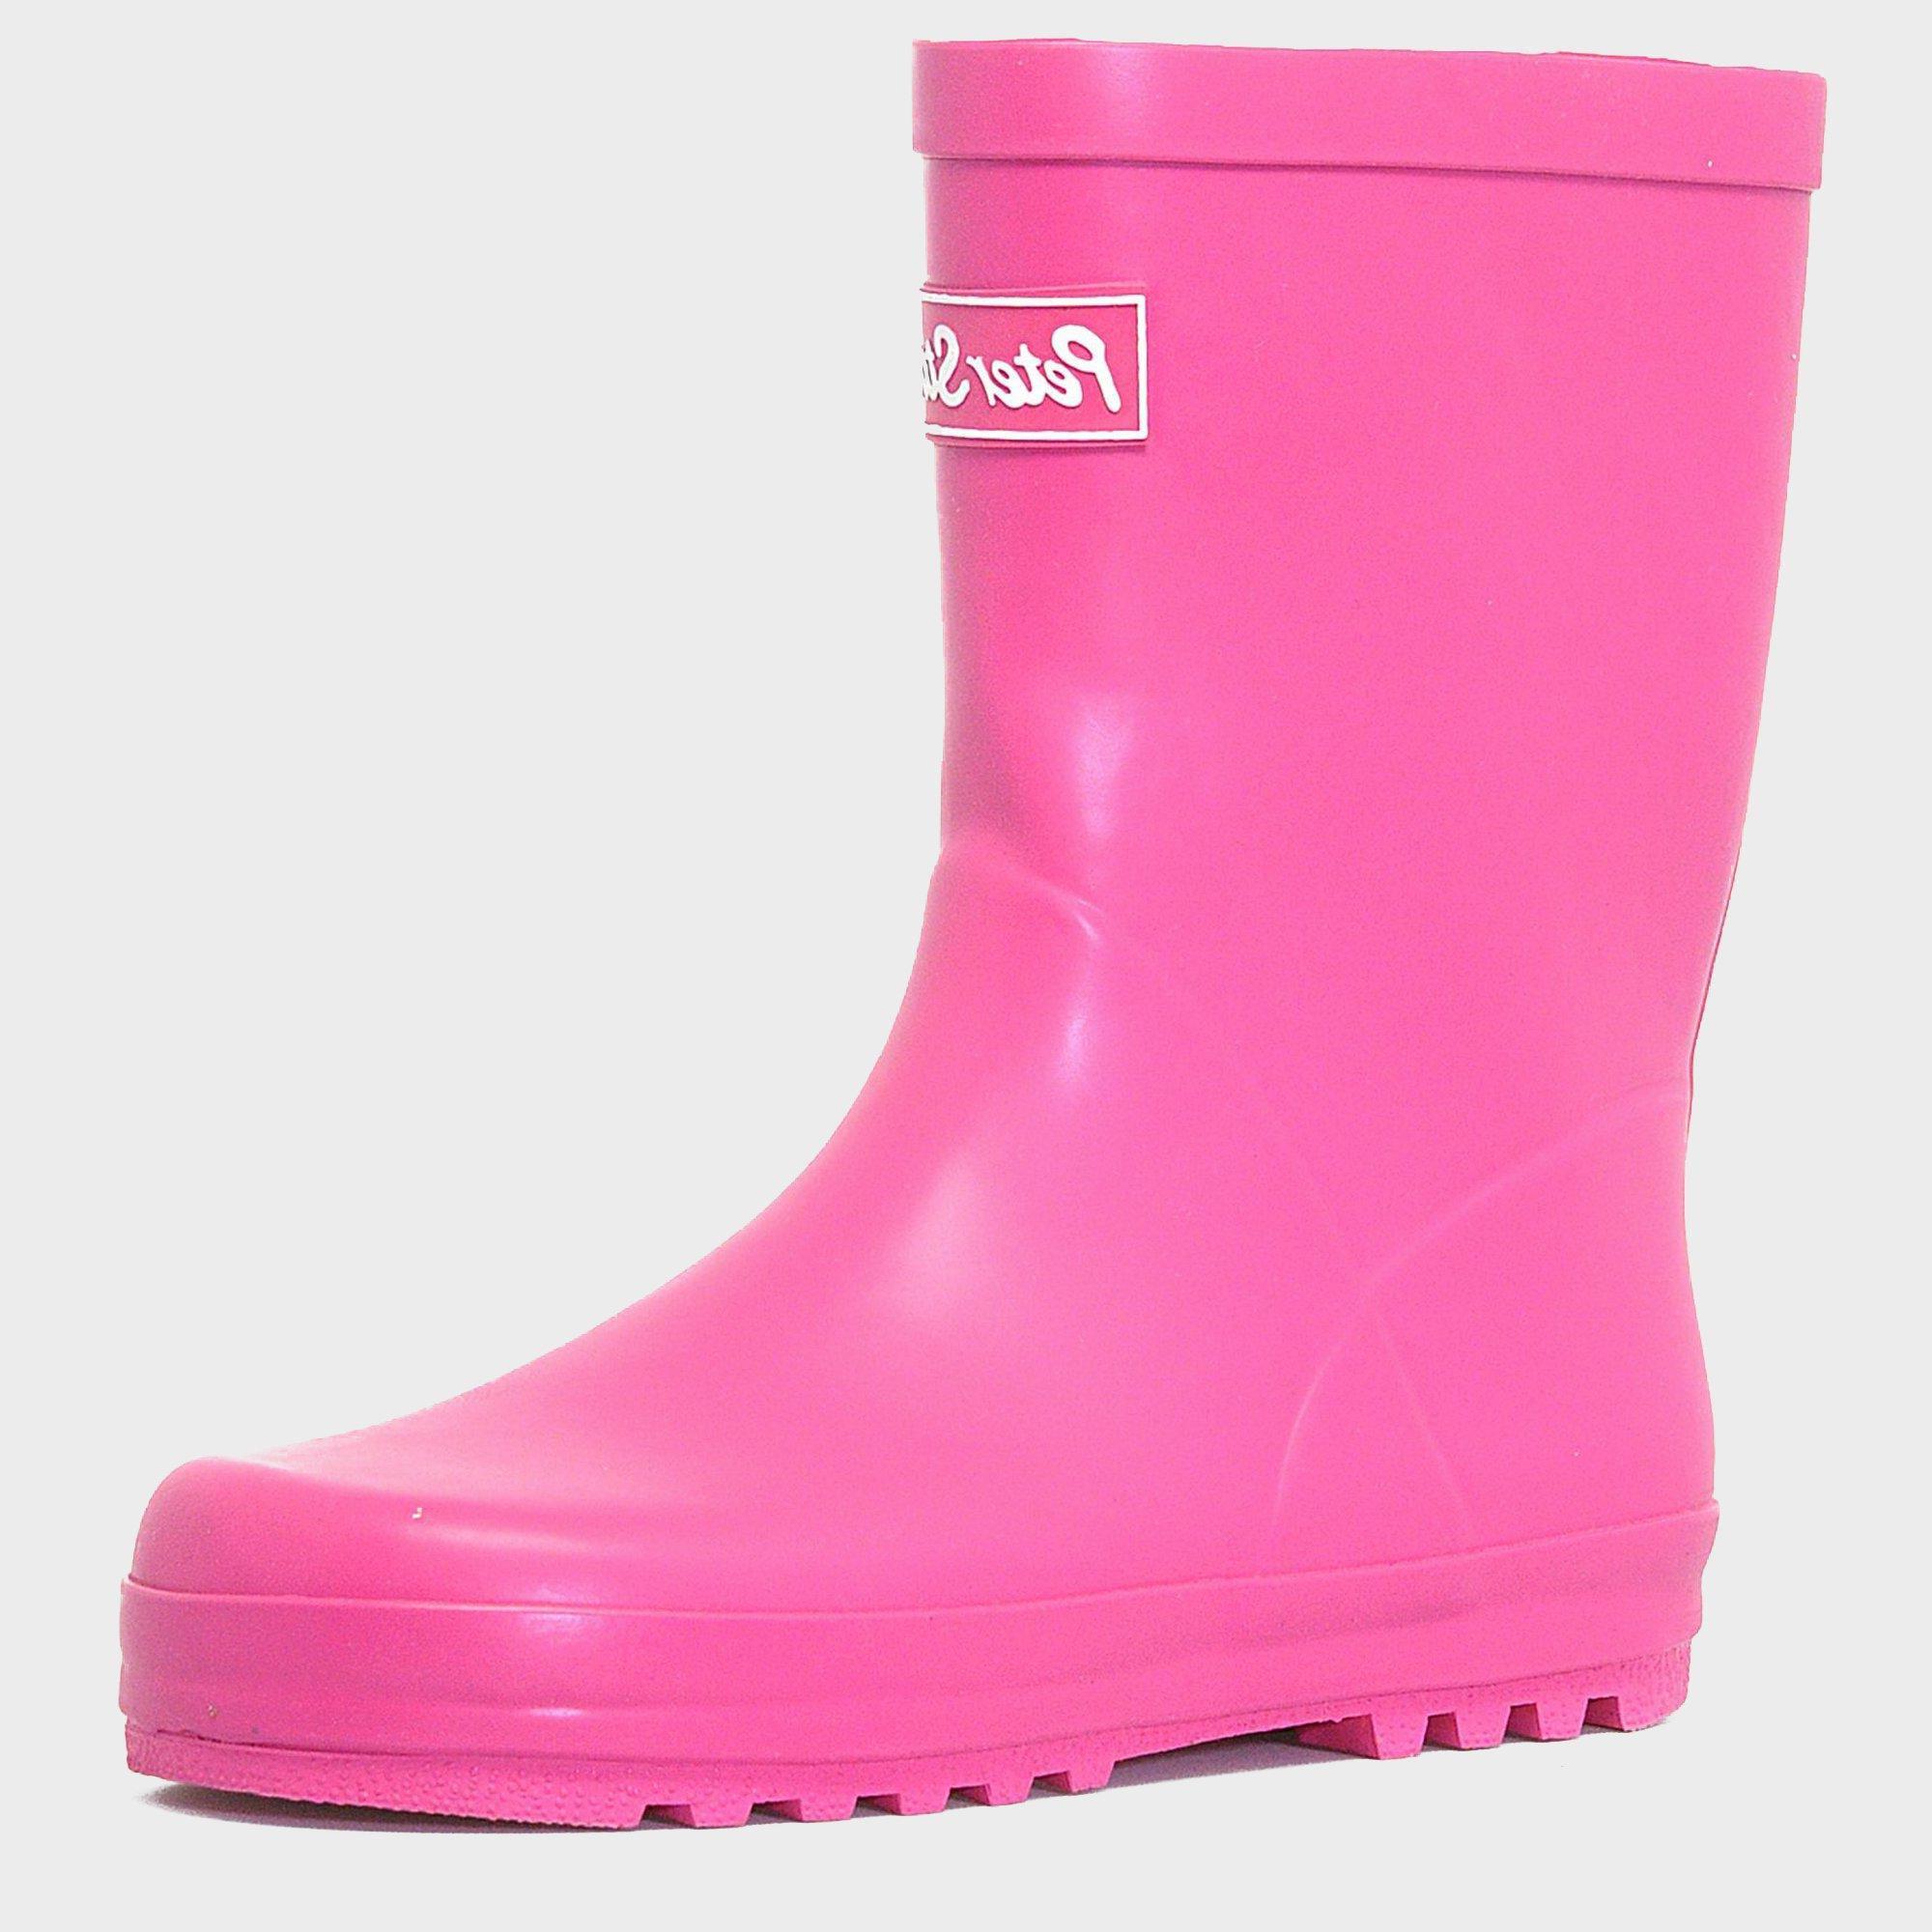 Peter Storm Girls' Wellies, Pink